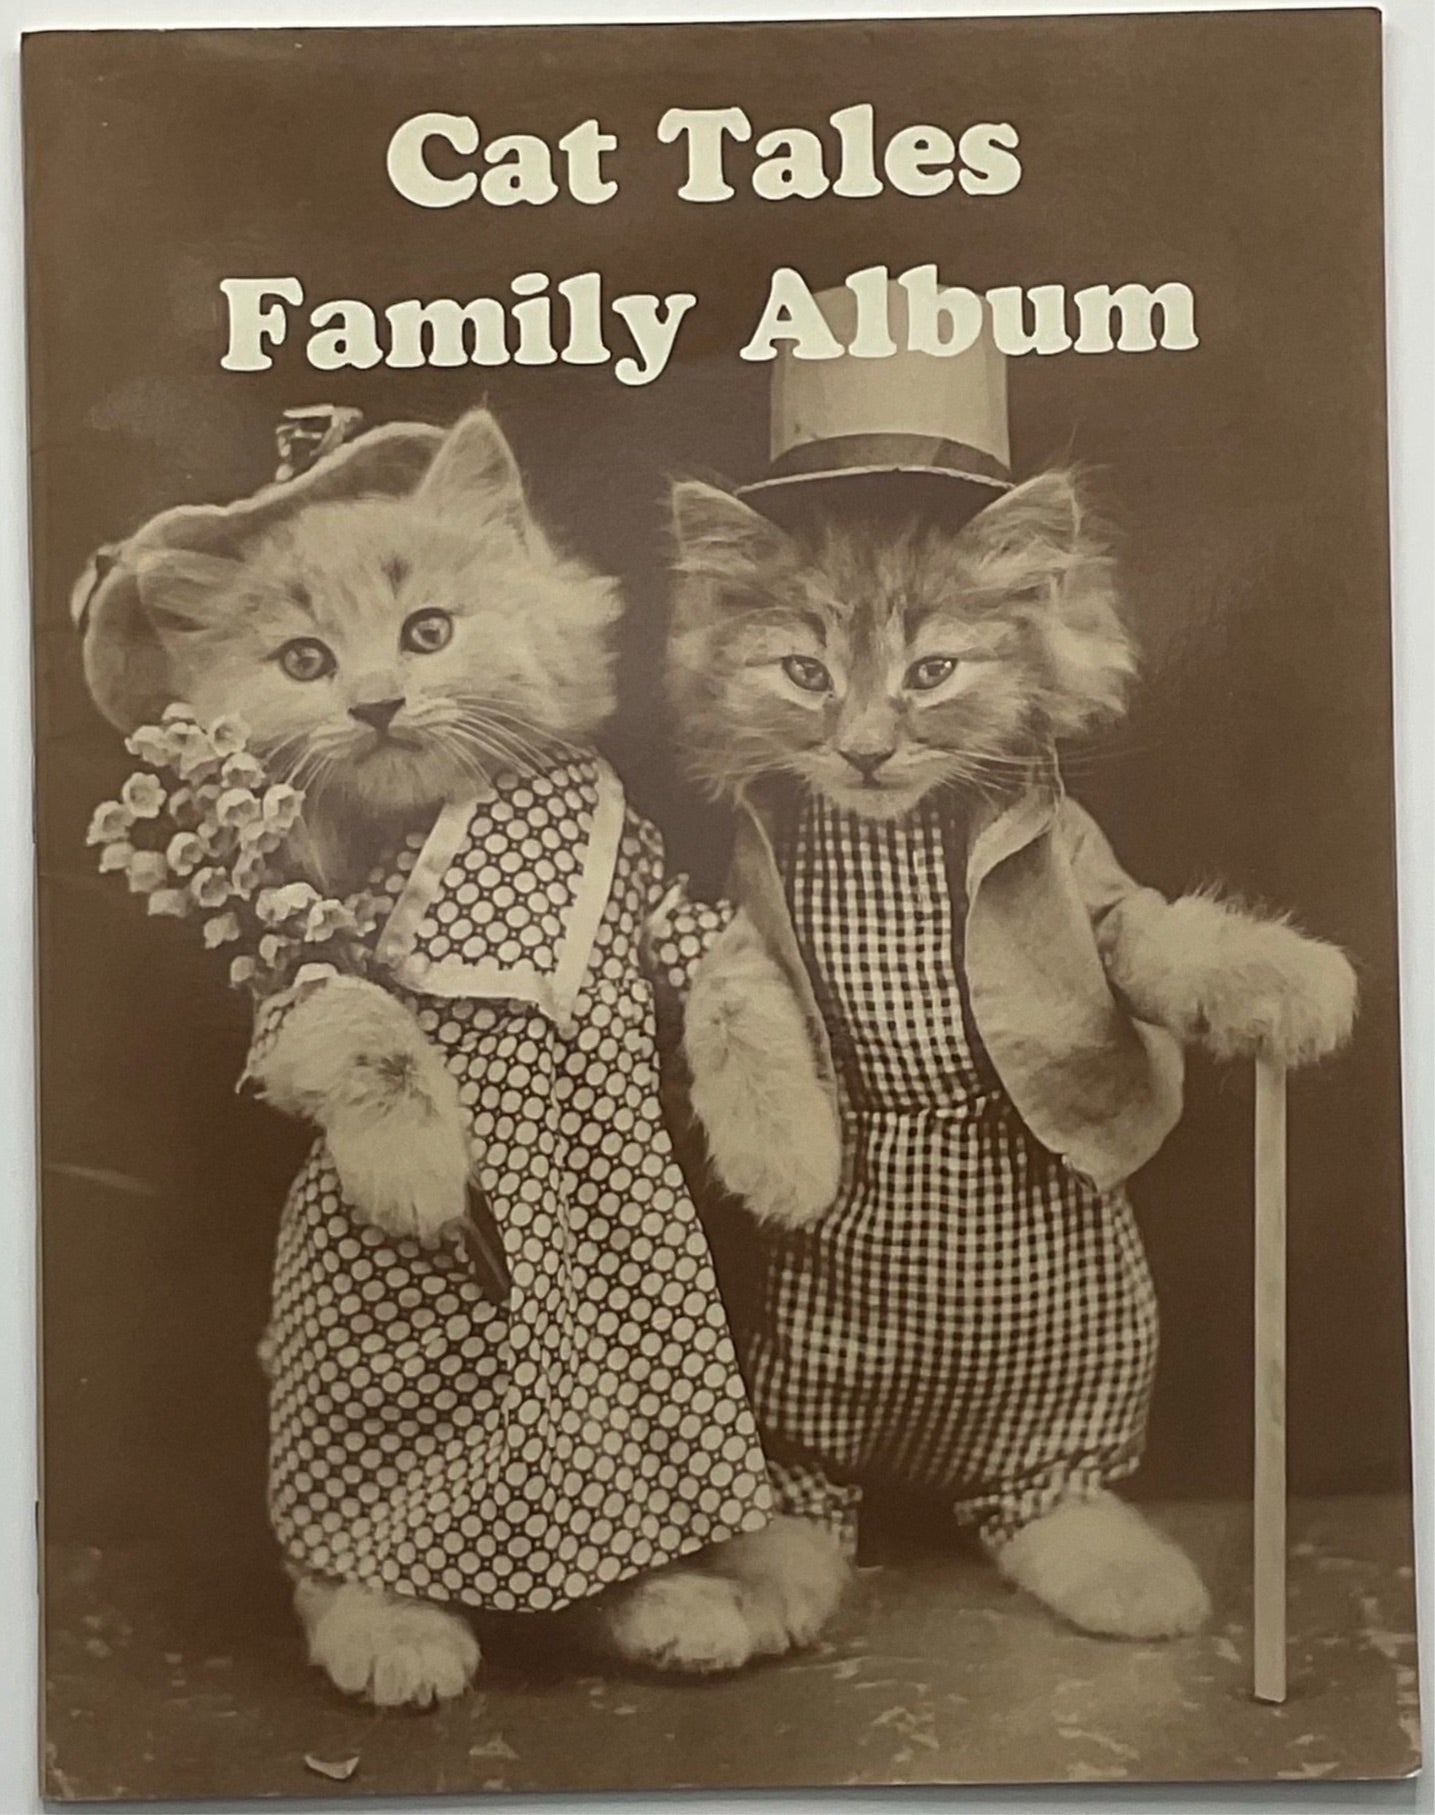 Cat Tales Family Album, Harry Whittier Frees